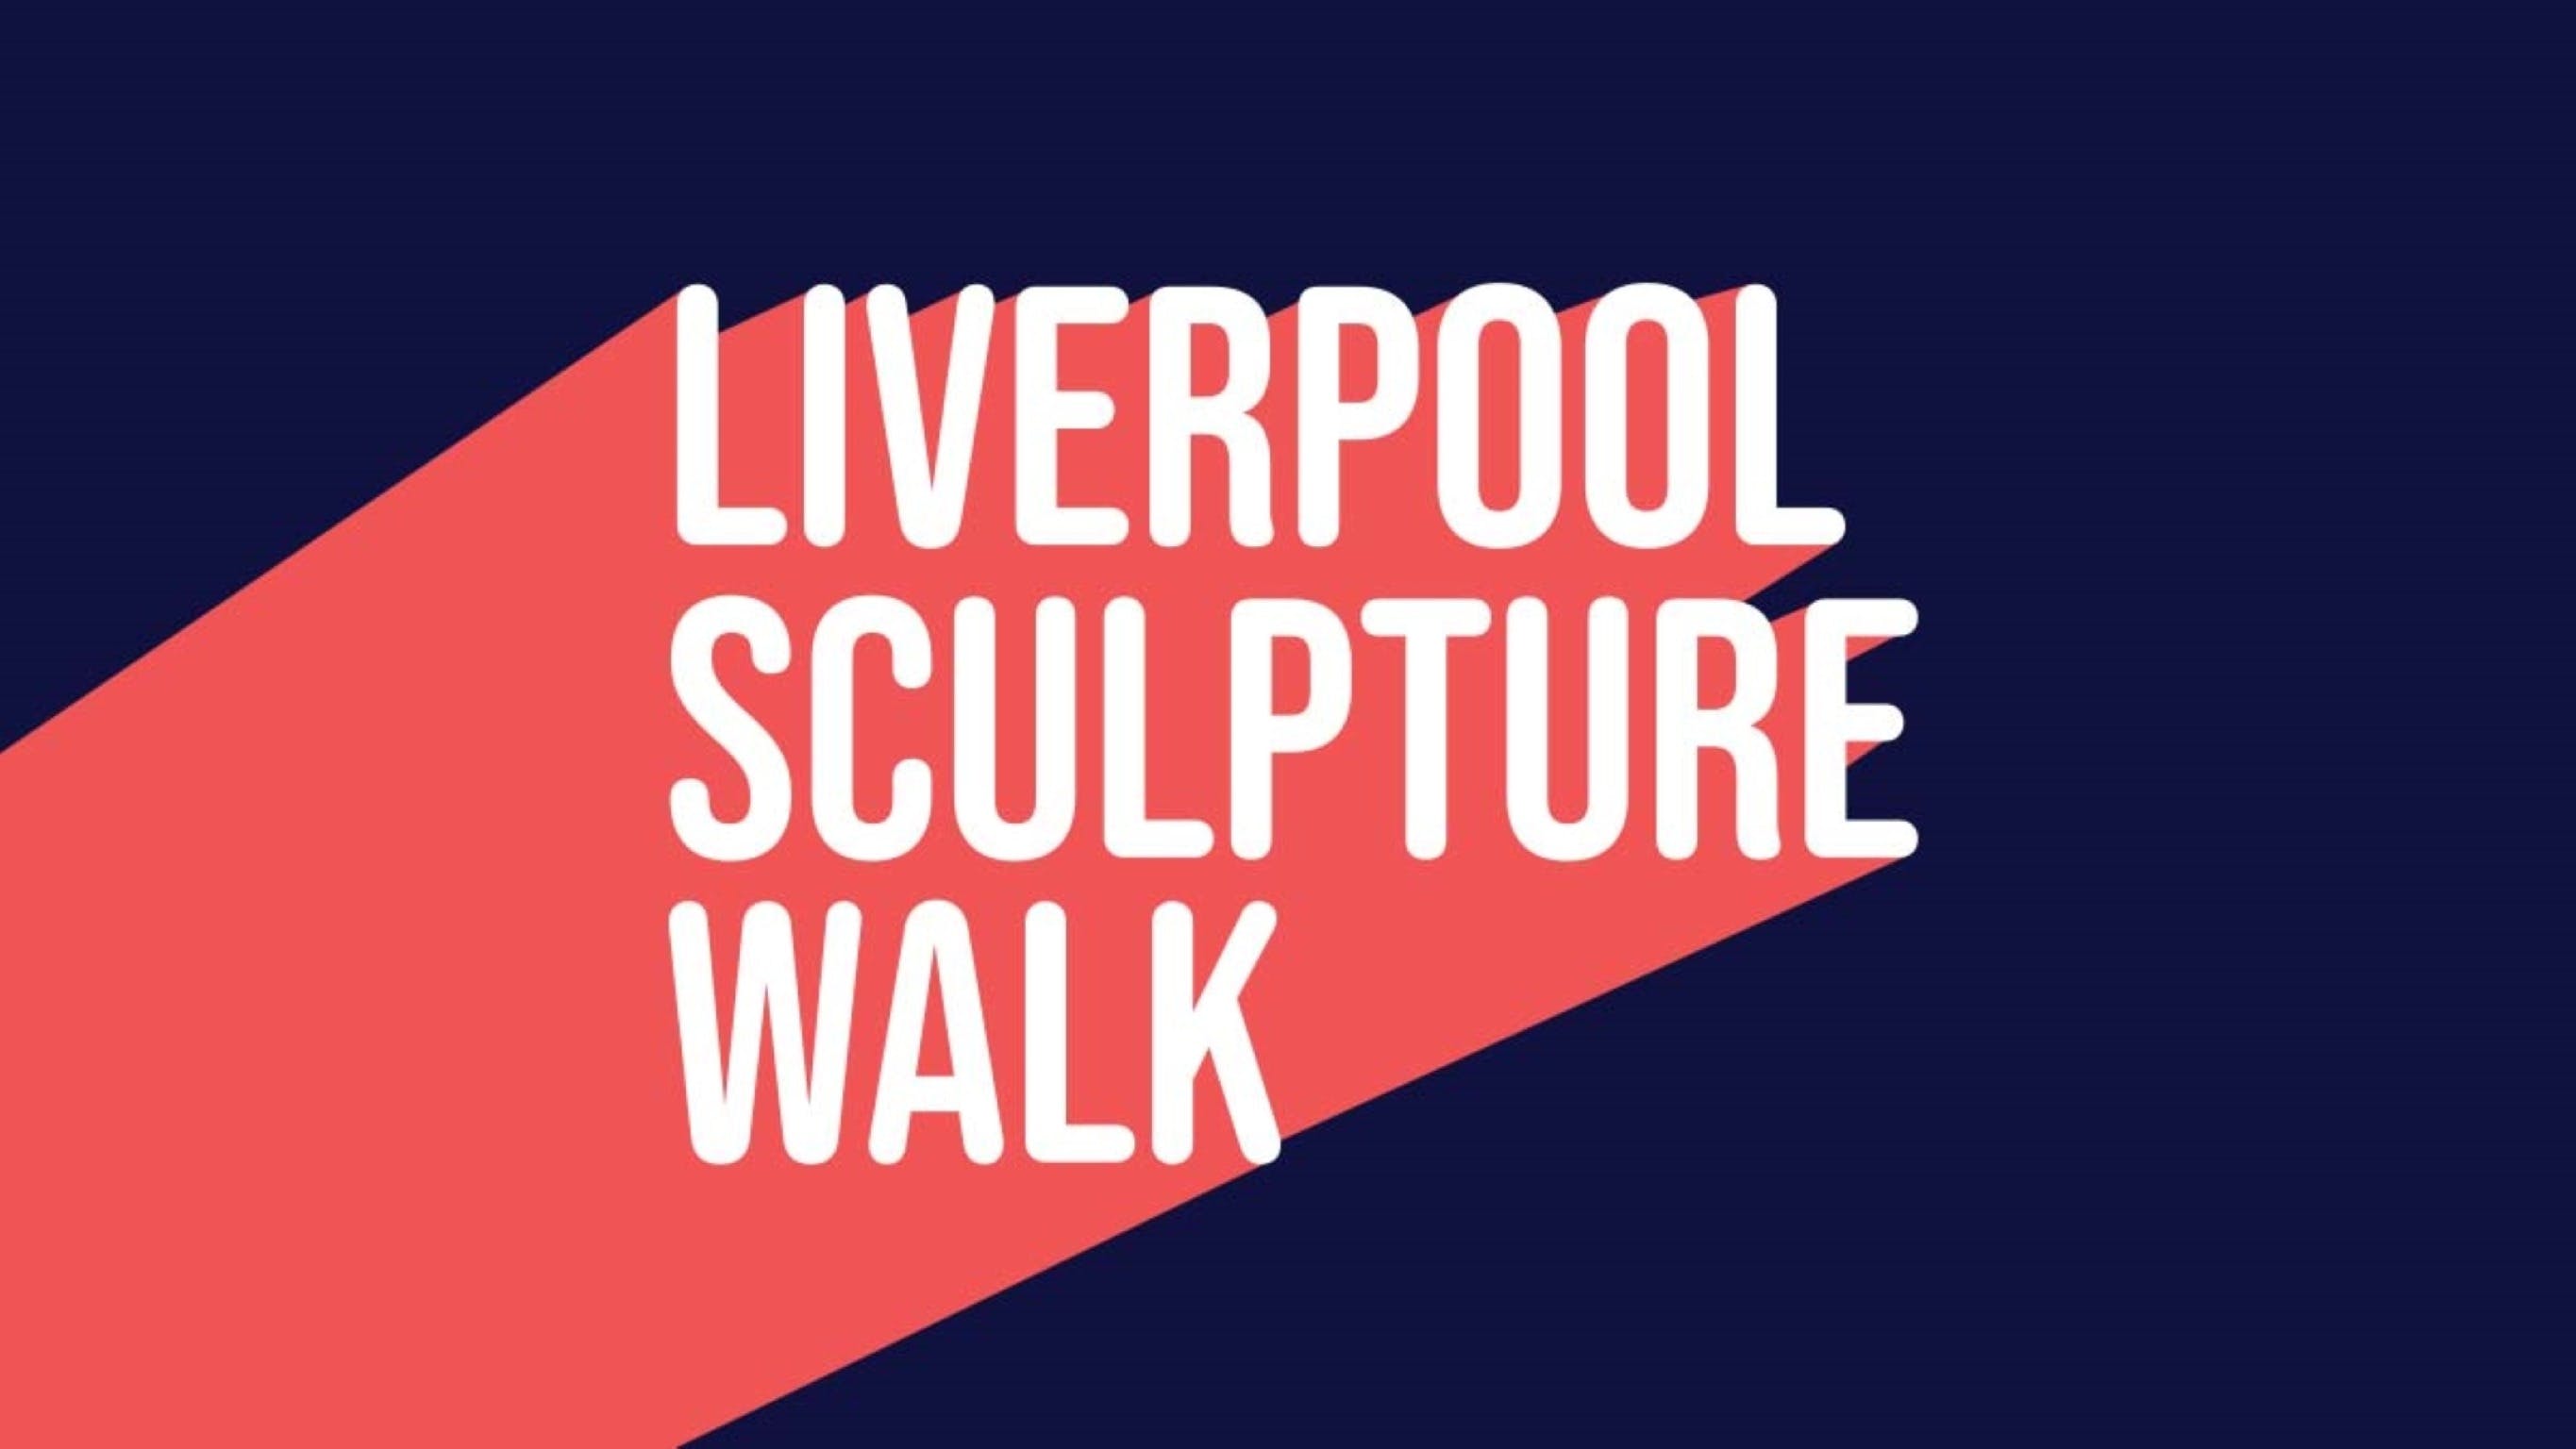 Liverpool Sculpture Walk - QLD Tourism